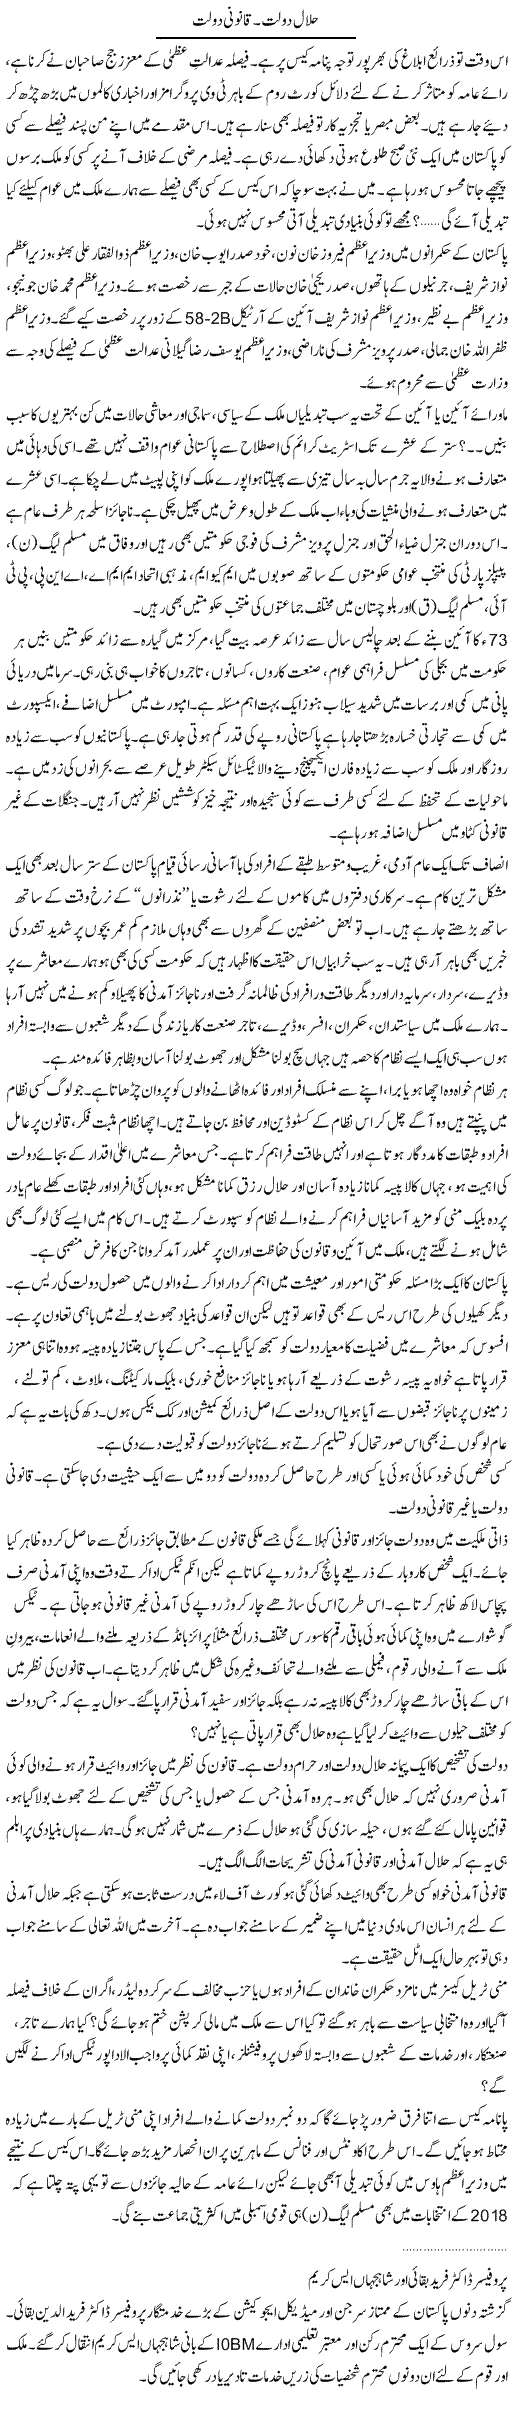 Halal Doulat. Qanooni Doulat | Dr. Waqar Yousuf Azeemi | Daily Urdu Columns